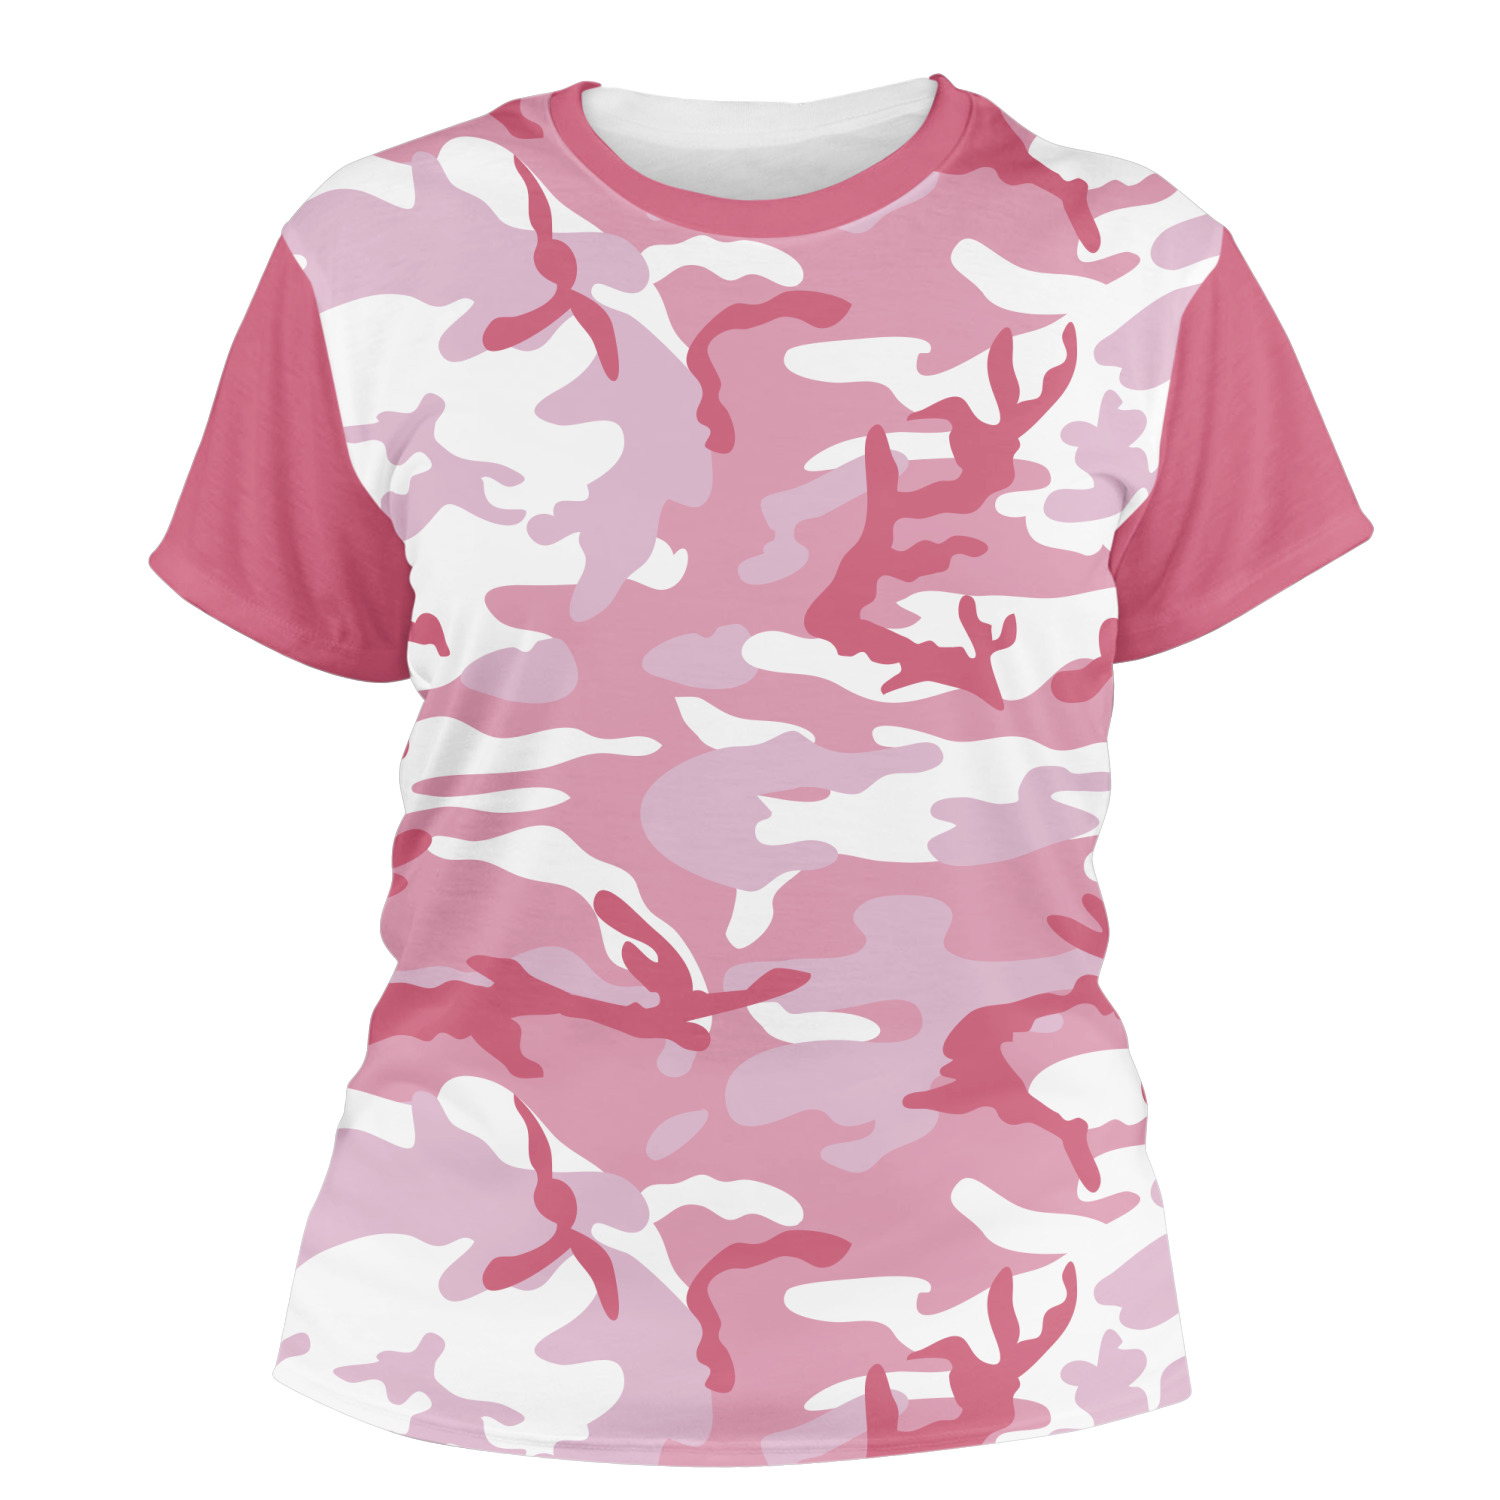 YouCustomizeIt Custom Pink Camo Women's Crew T-Shirt - Medium